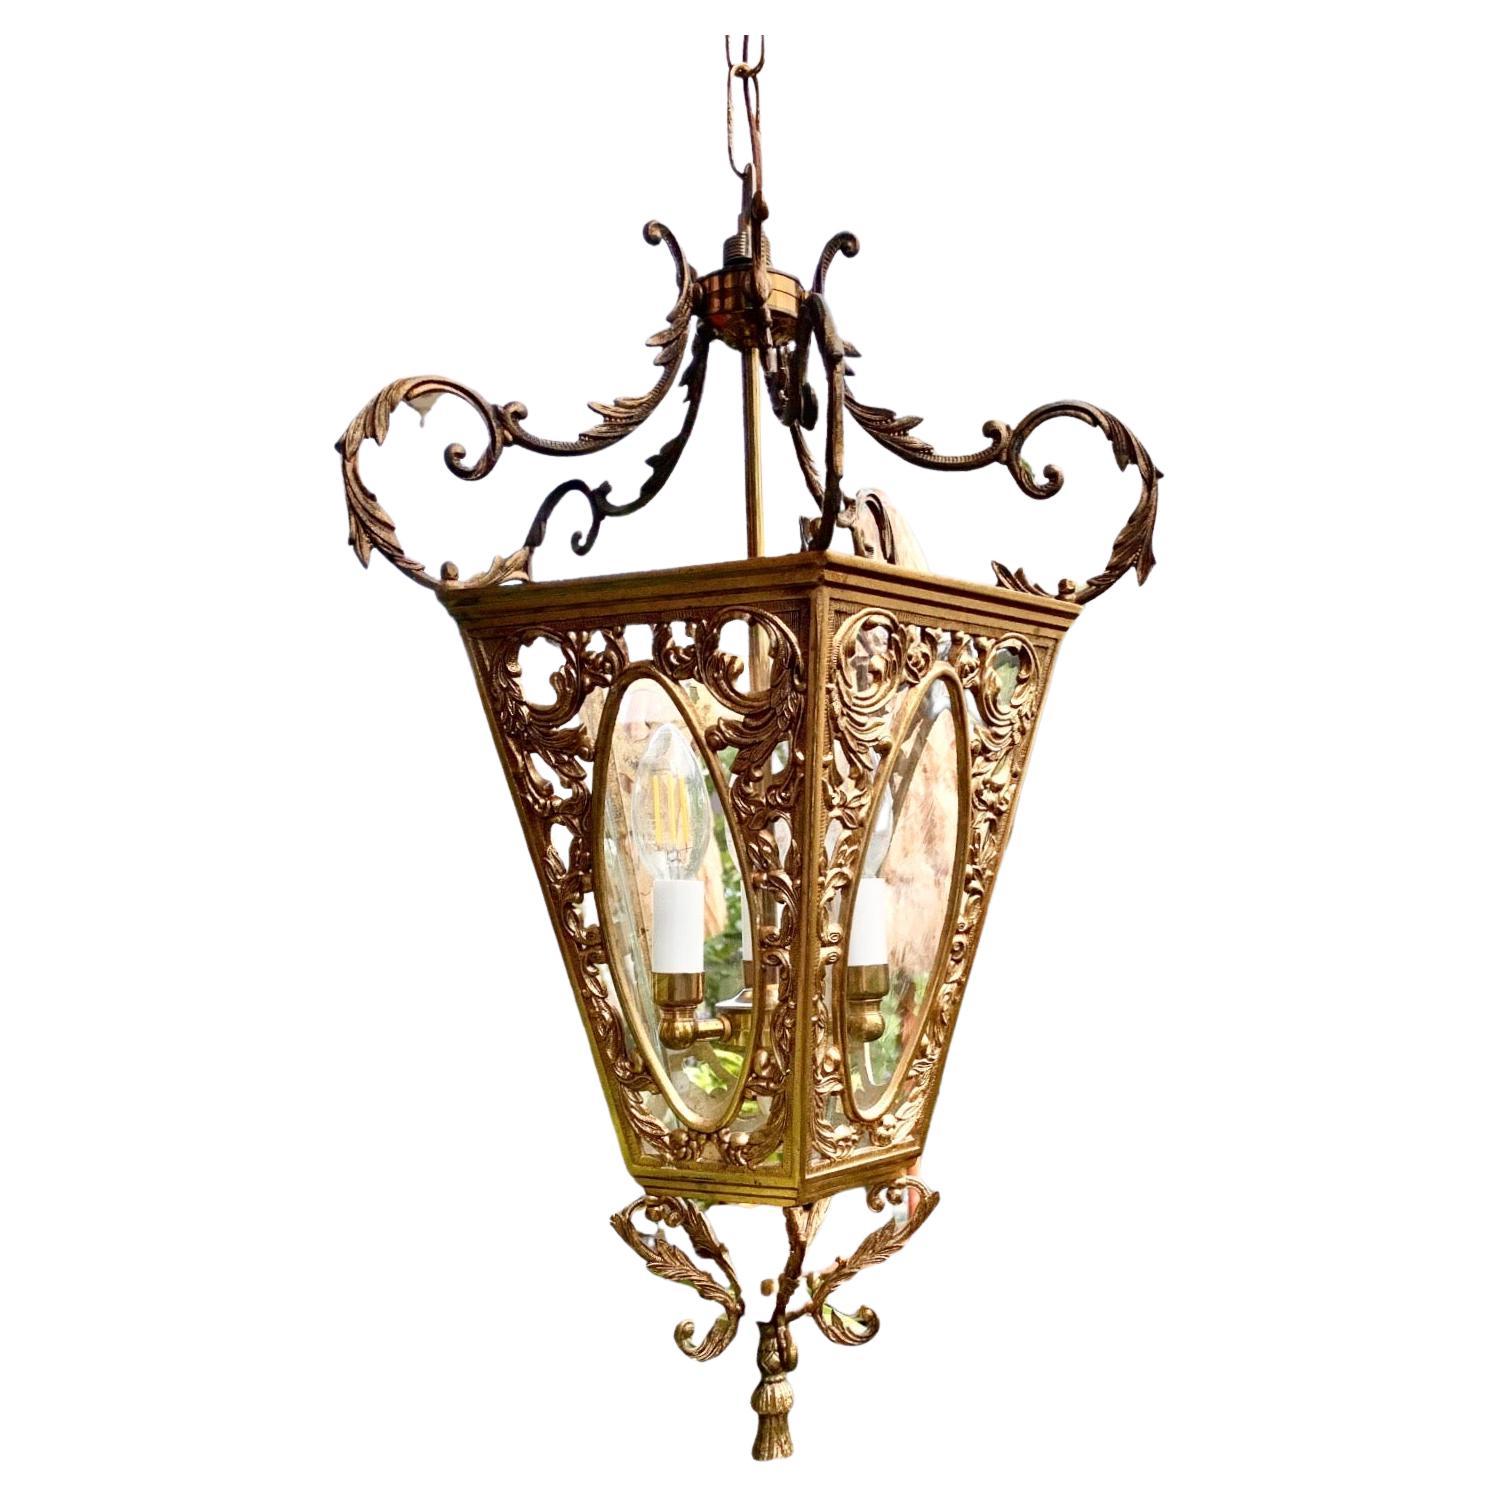 Antique Early 20th C. Gilt Brass & Glass Pentagonal Hall Lantern For Sale